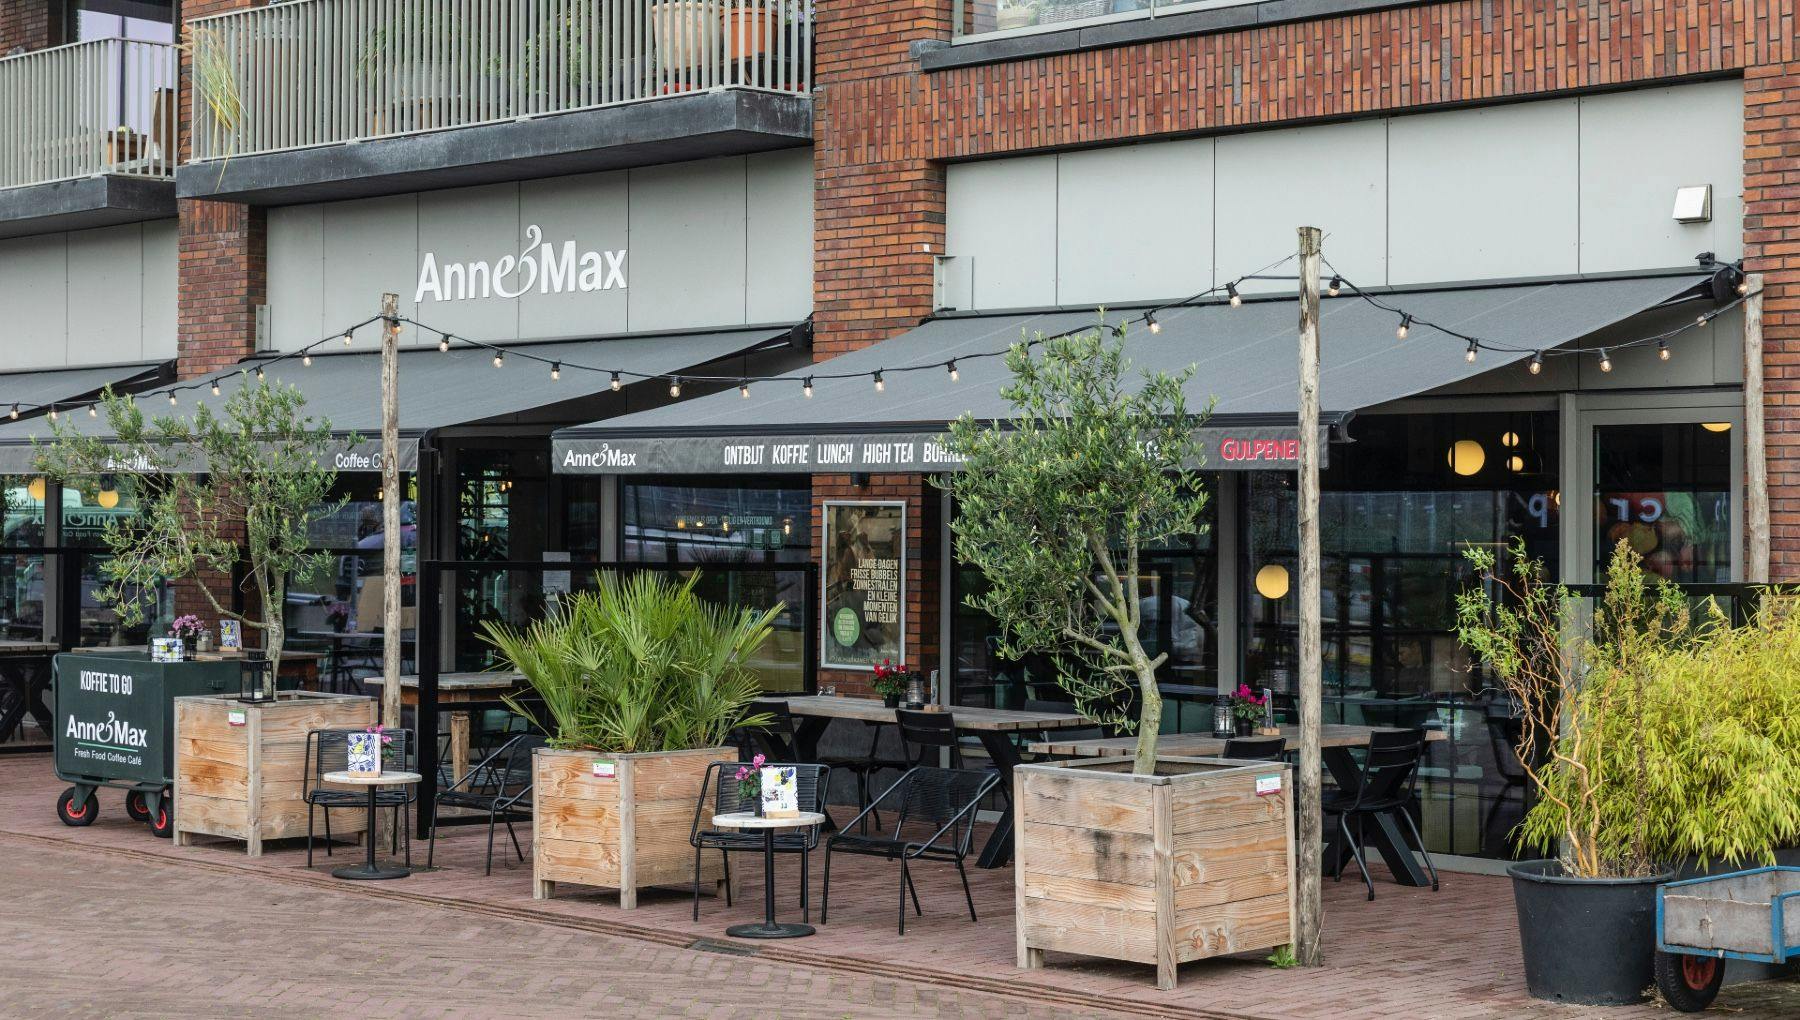 Anne&Max café exterior and terrace